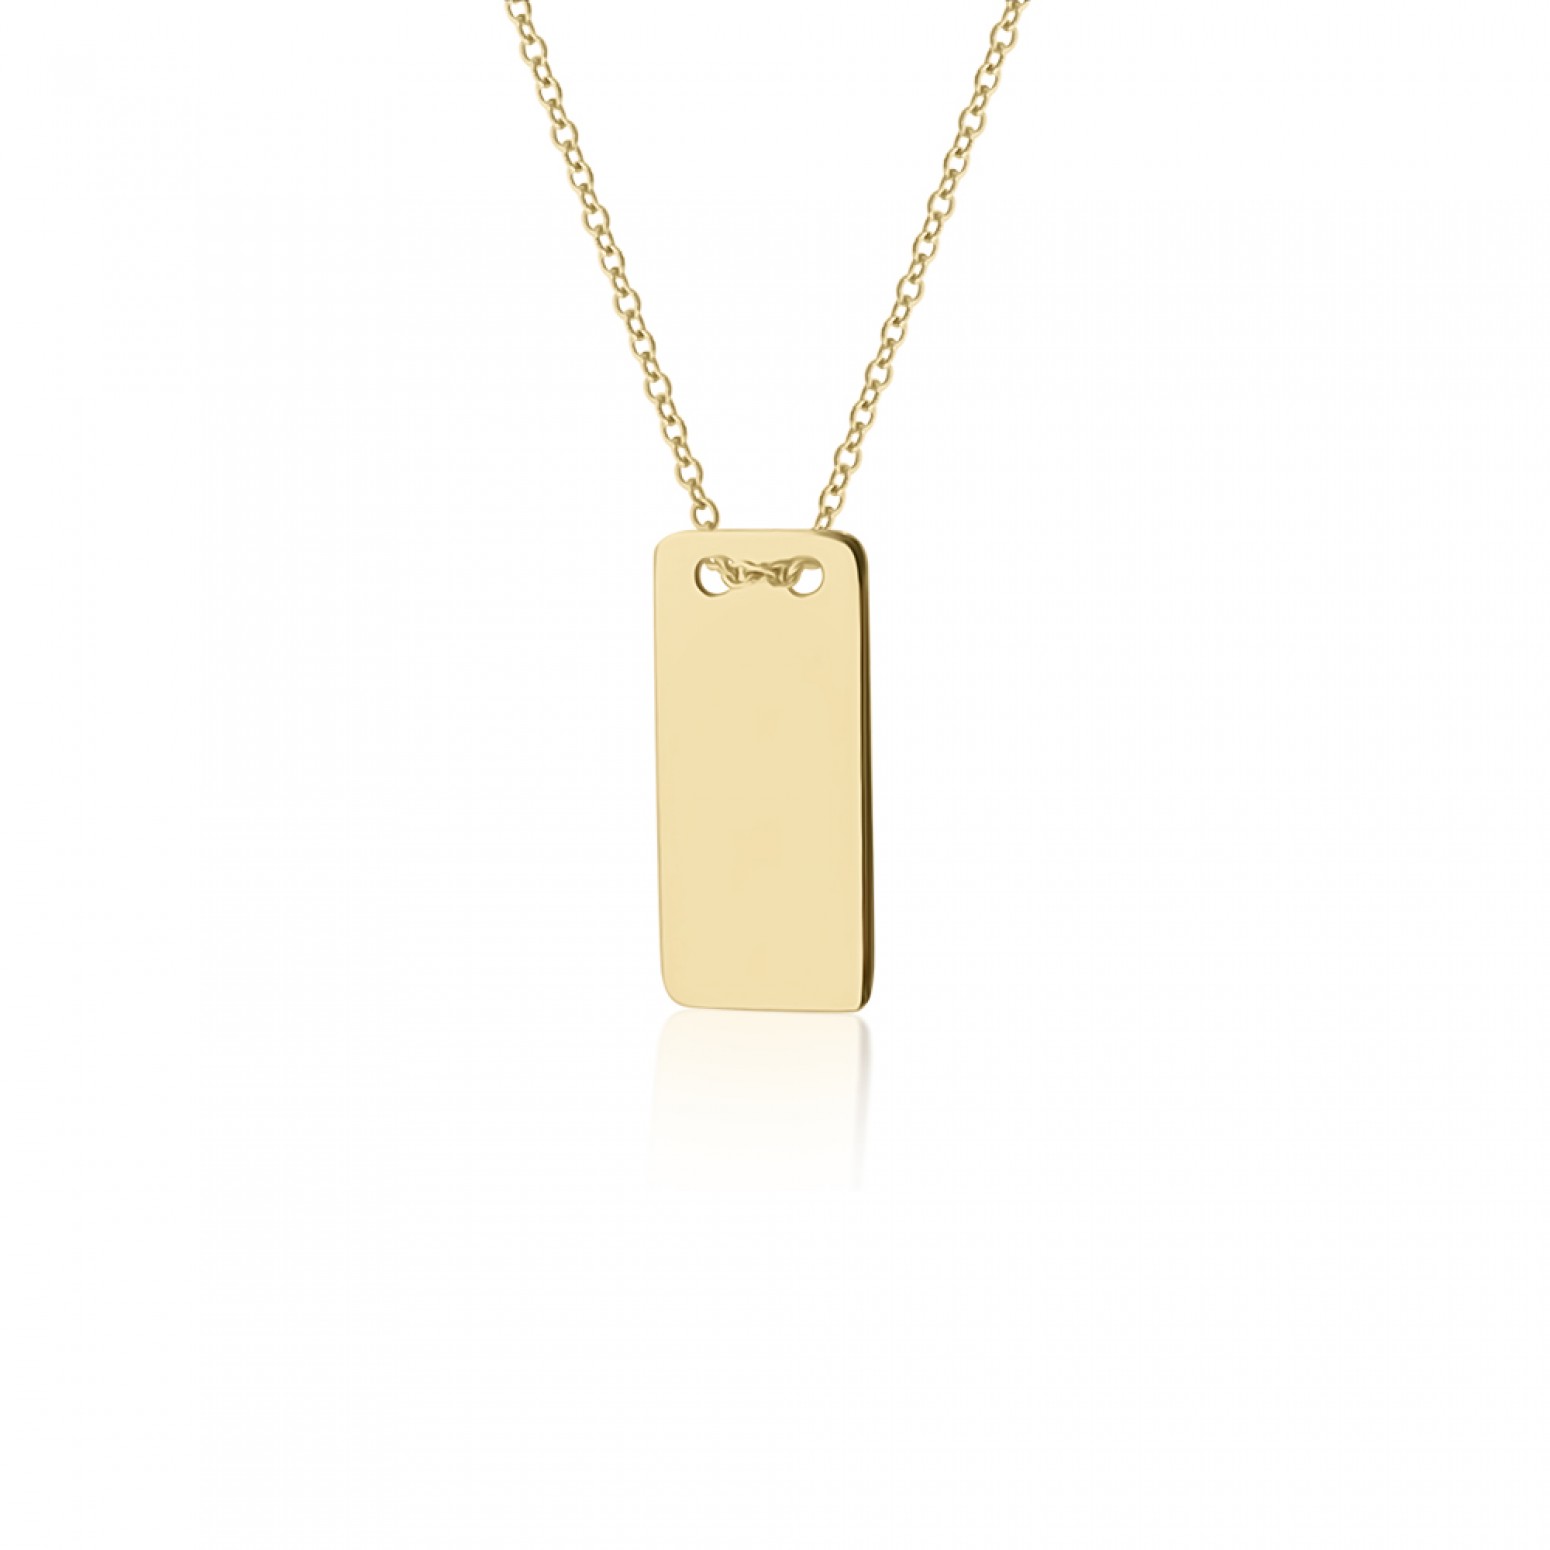 Tag necklace, Κ14 gold, ko5312 NECKLACES Κοσμηματα - chrilia.gr